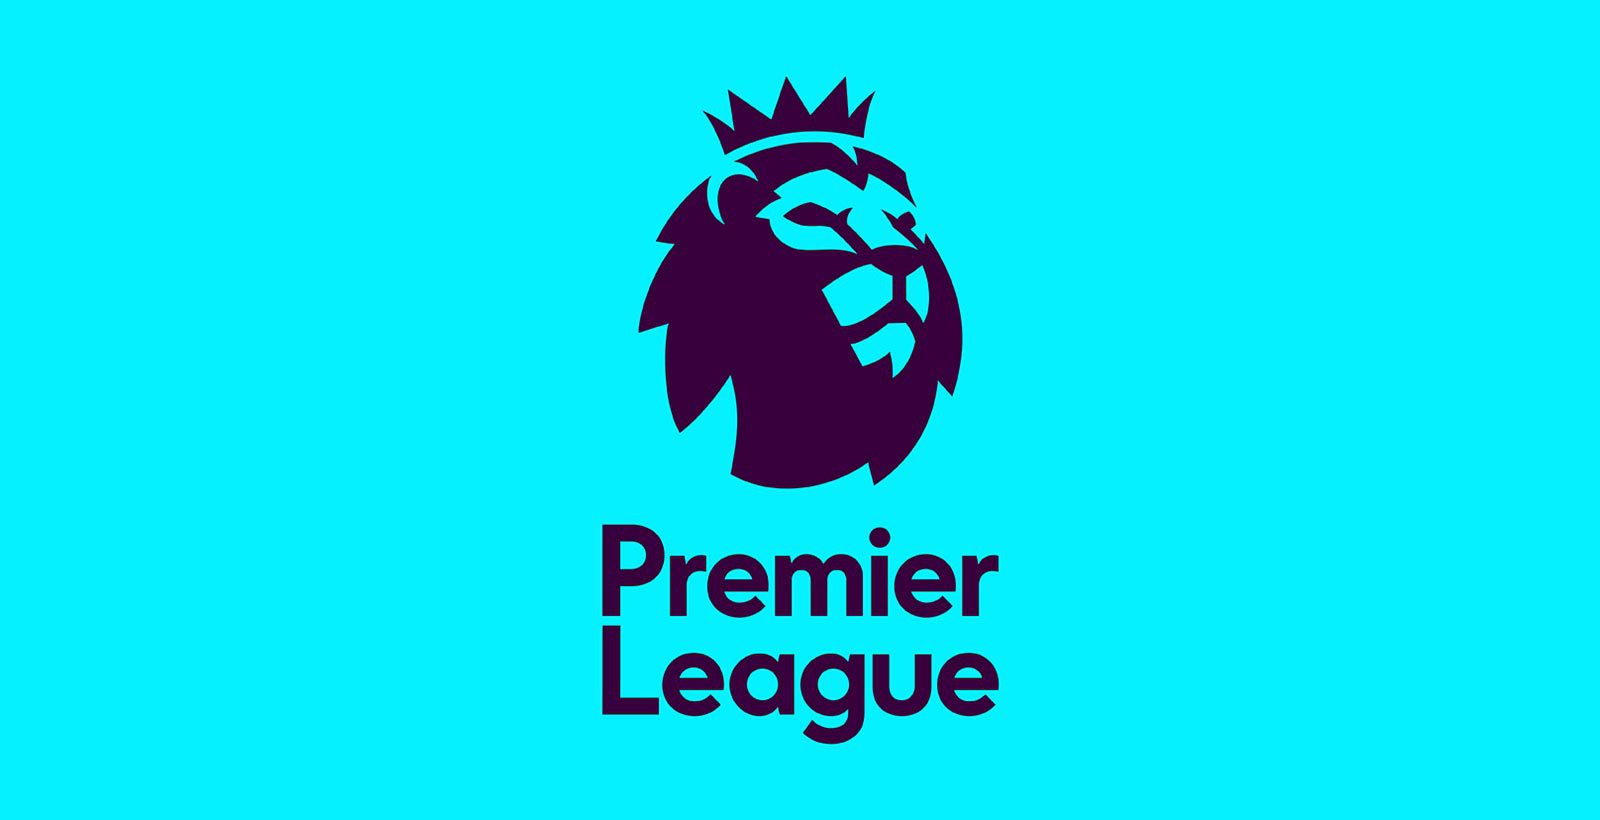 Premier League “Can” Resume In June – UK Govt